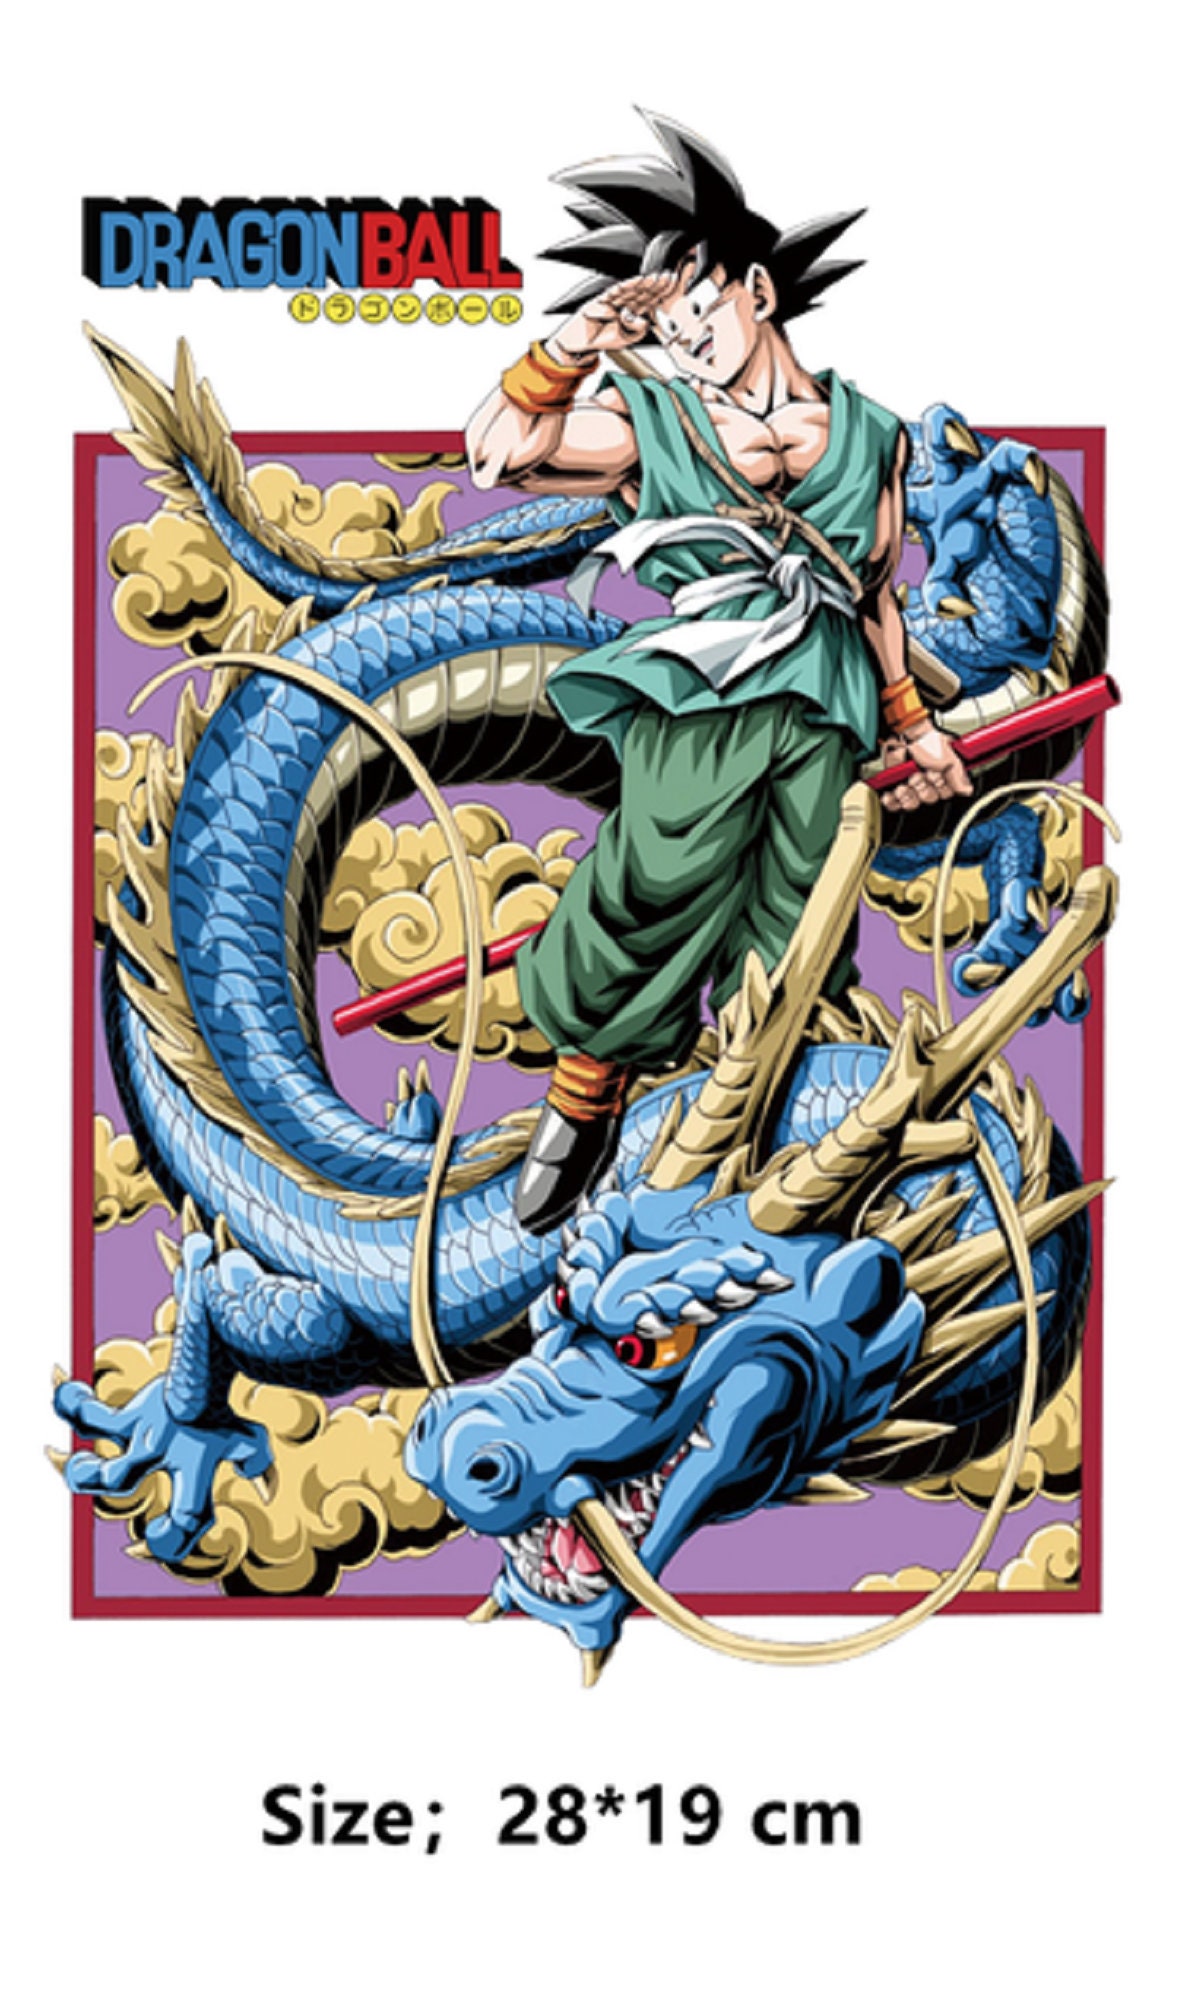 Roblox Goku Comic Game Art shirt